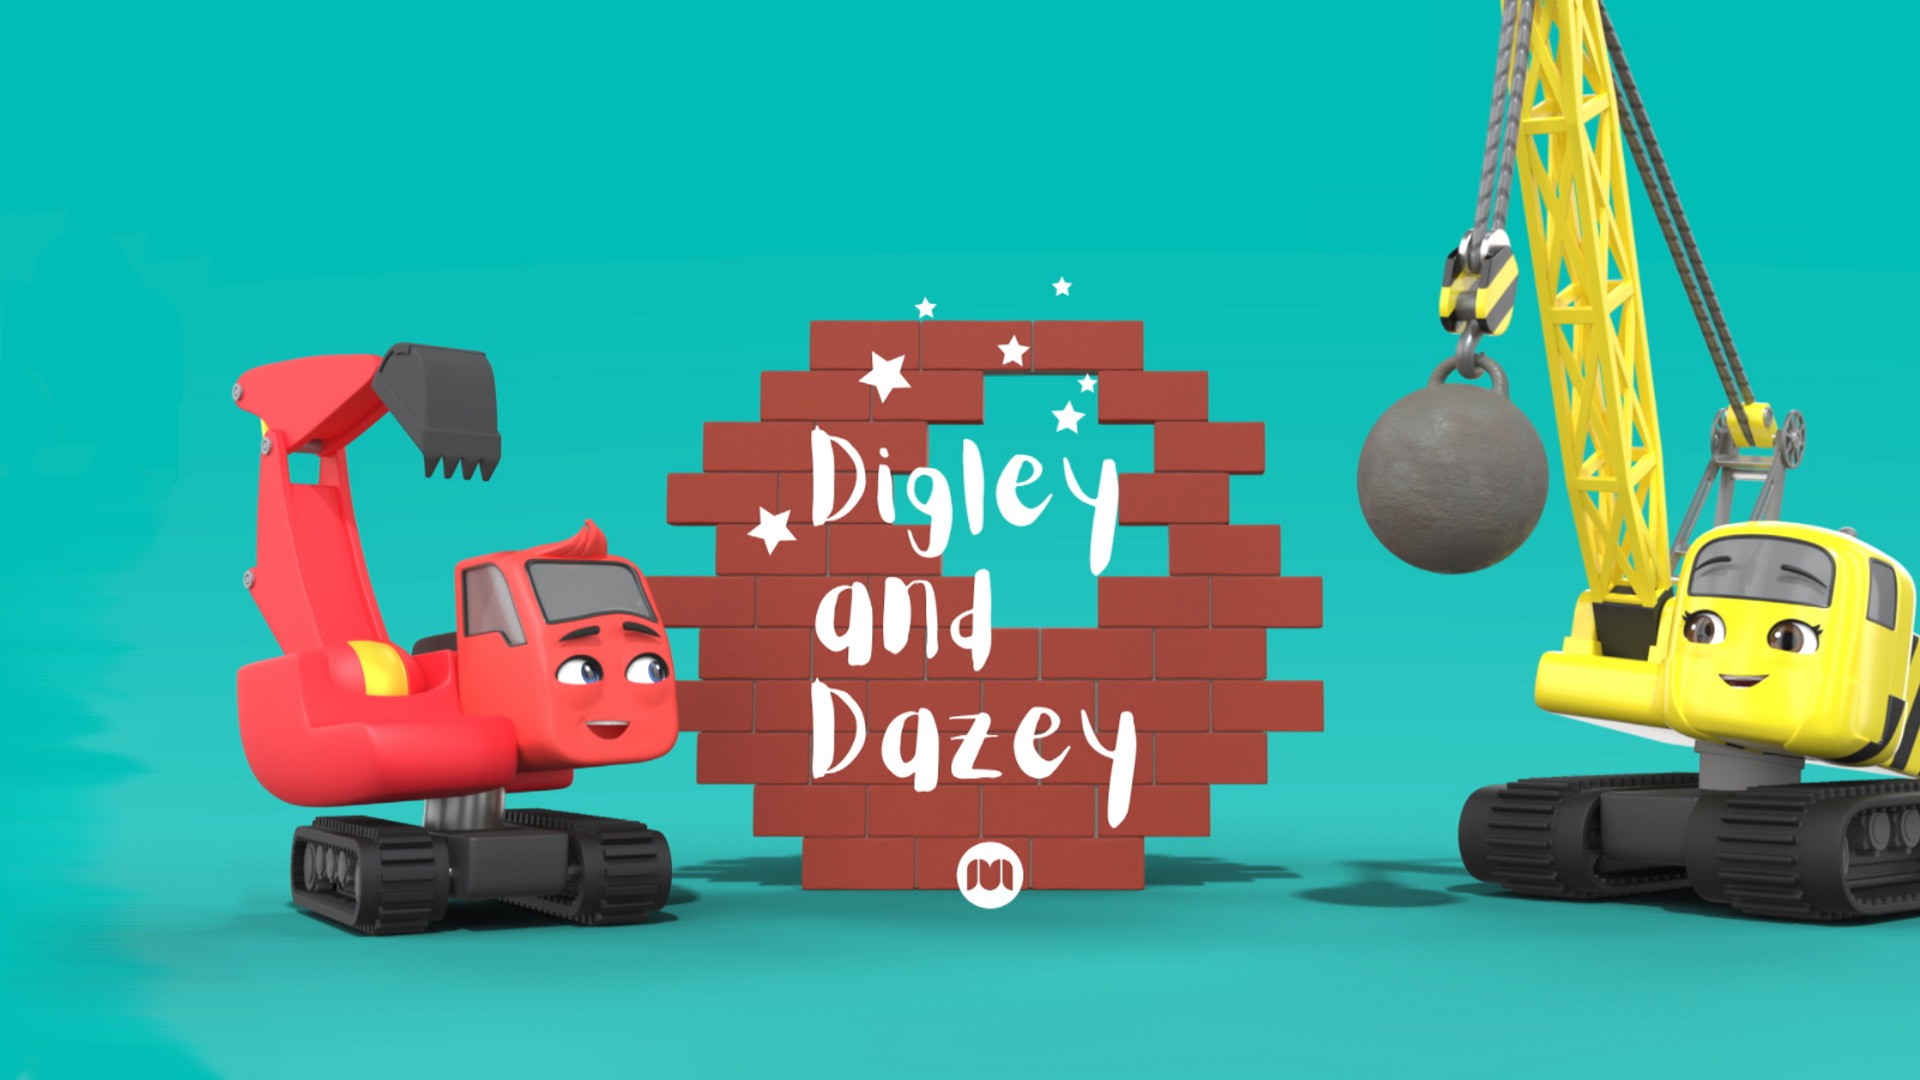 Digley and Dazey